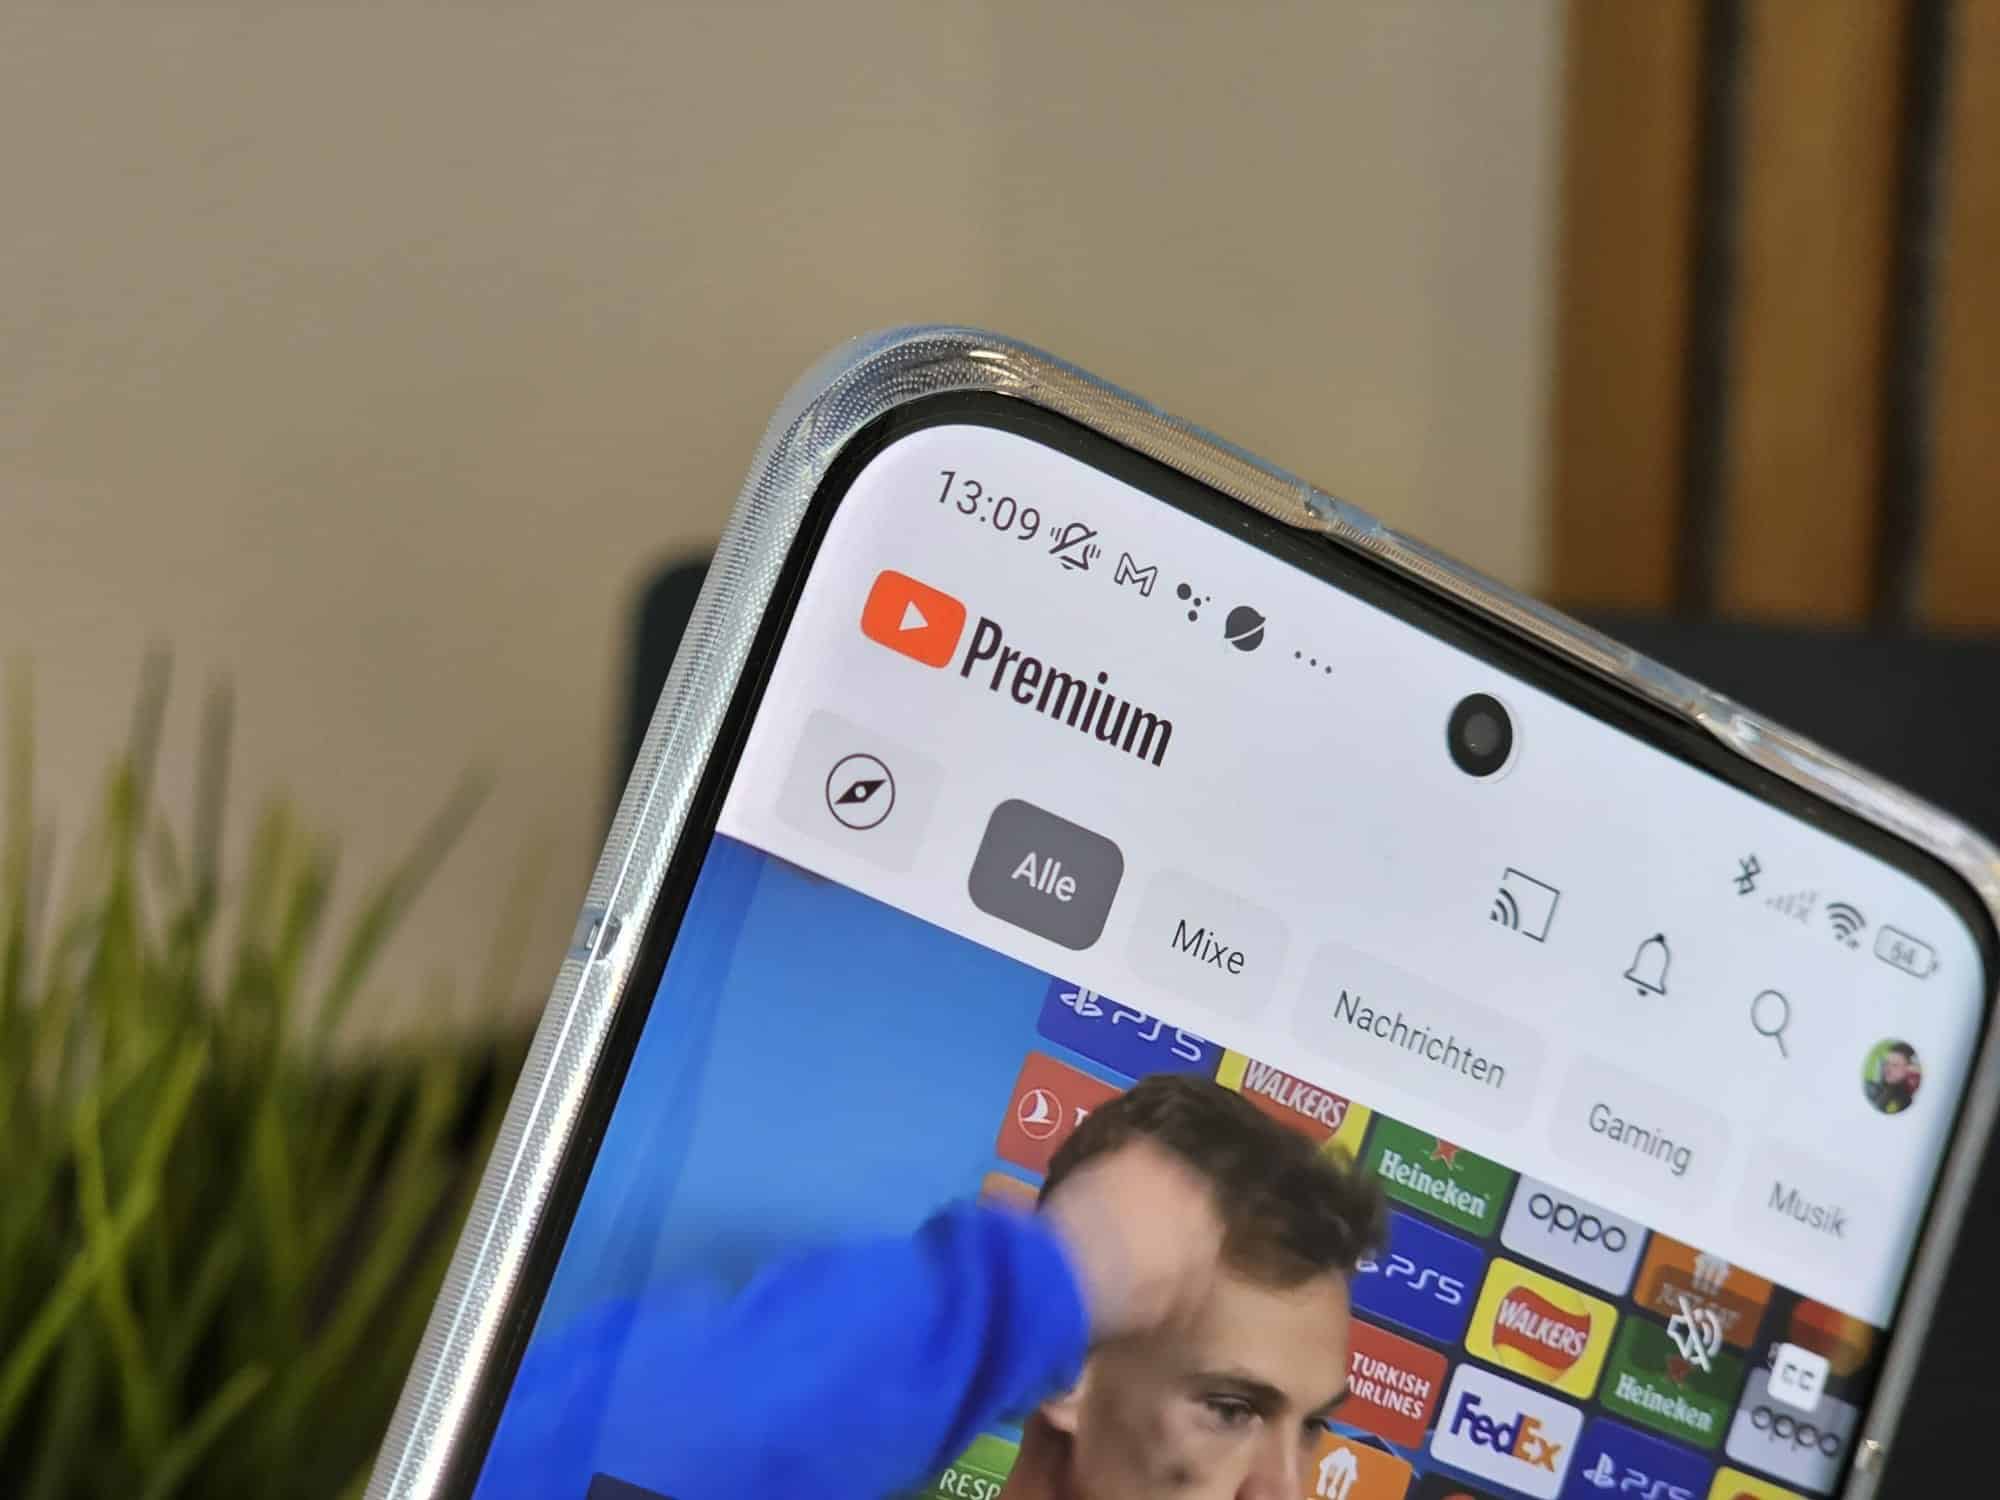 YouTube Premium sada kopira Netflixovu ponudu igara i uvodi “Playables” za Android uređaje